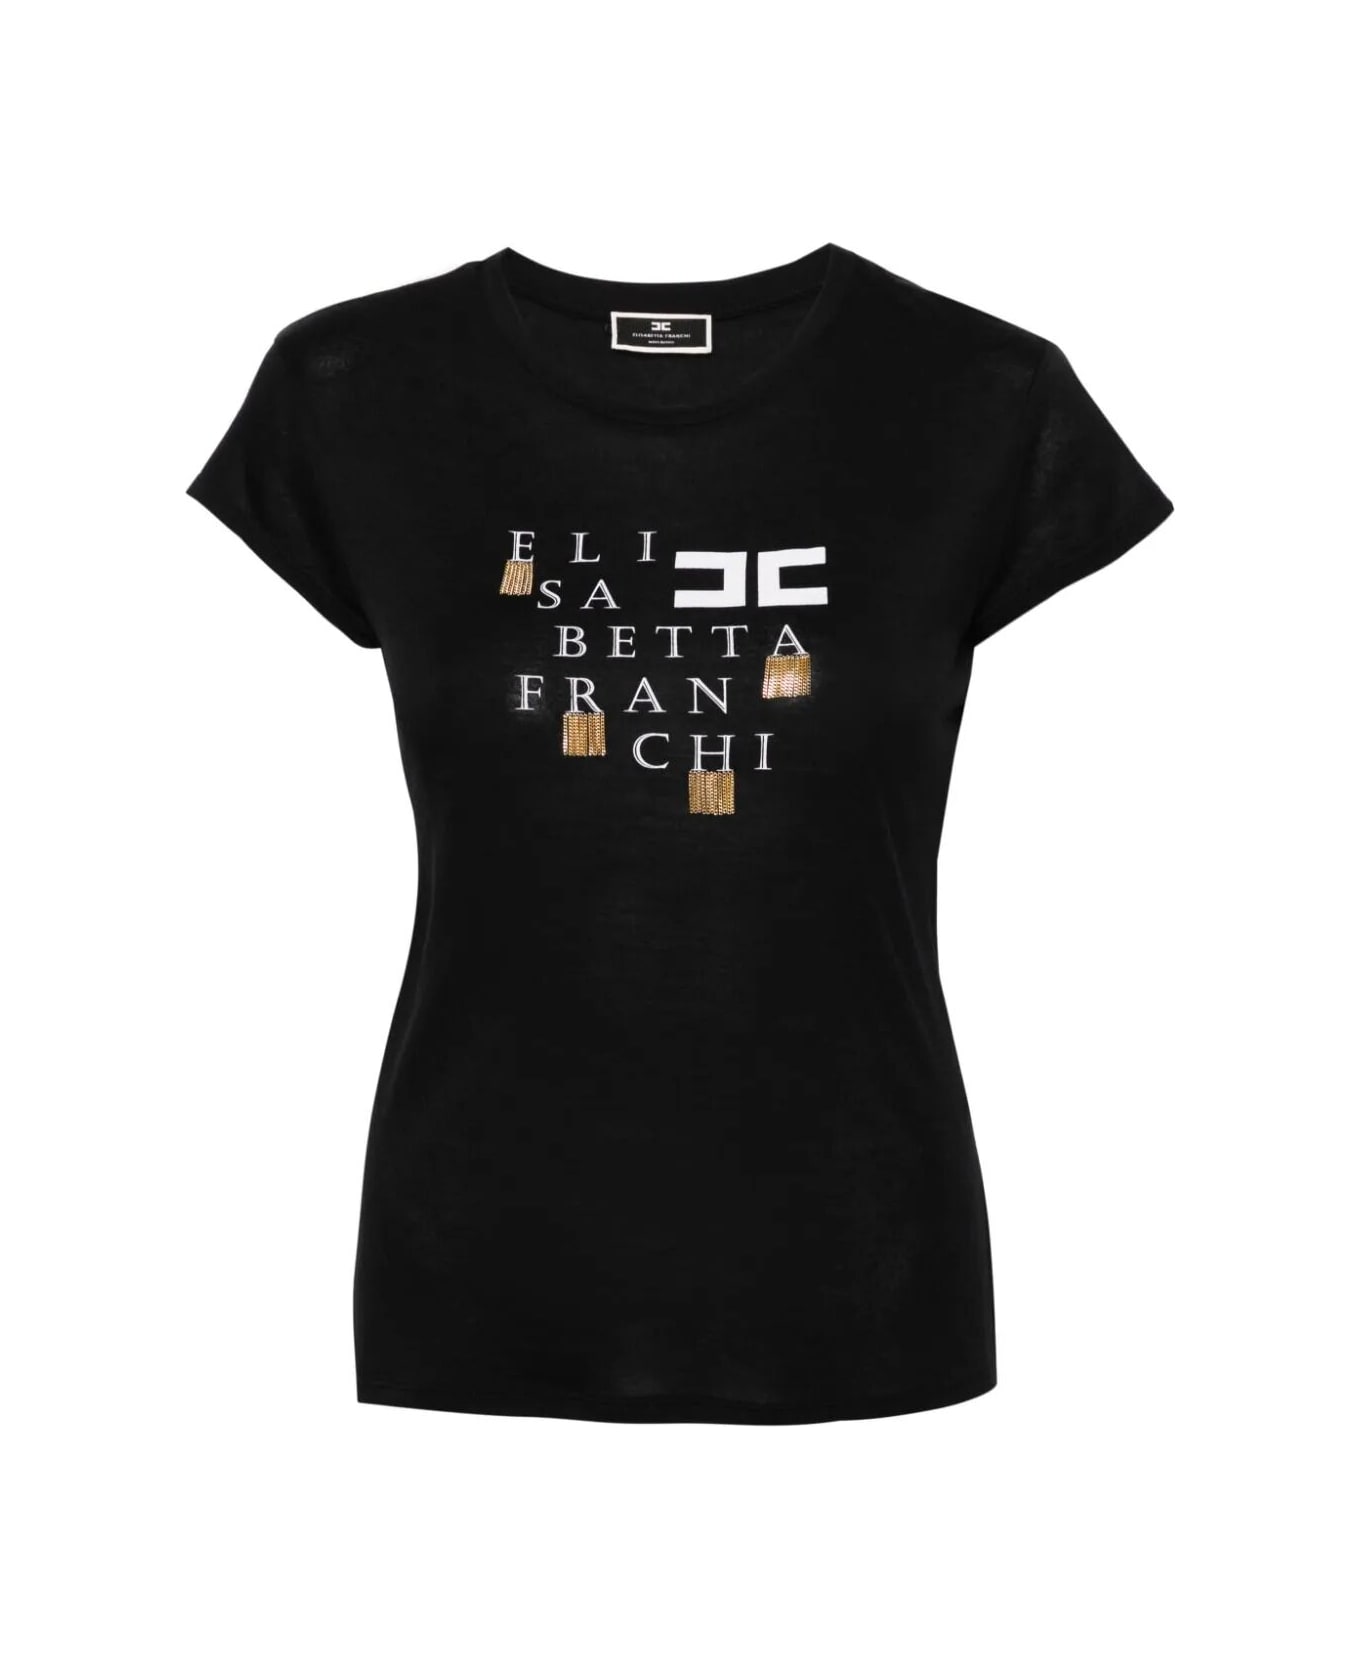 Elisabetta Franchi Black T-shirt With Prints - Black